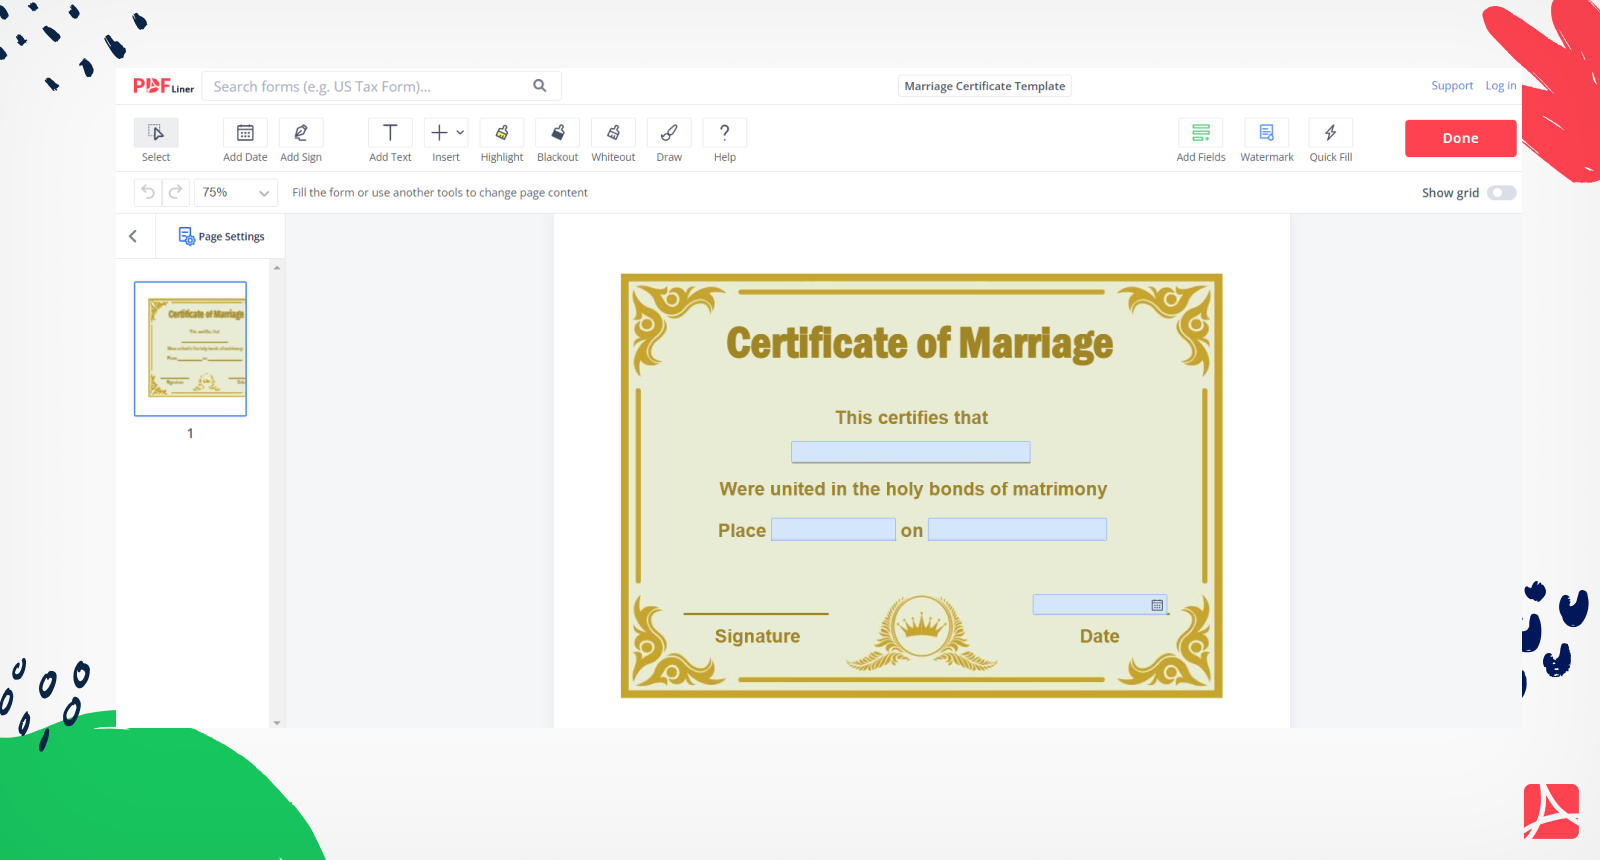 Marriage Certificate Template Screenshot